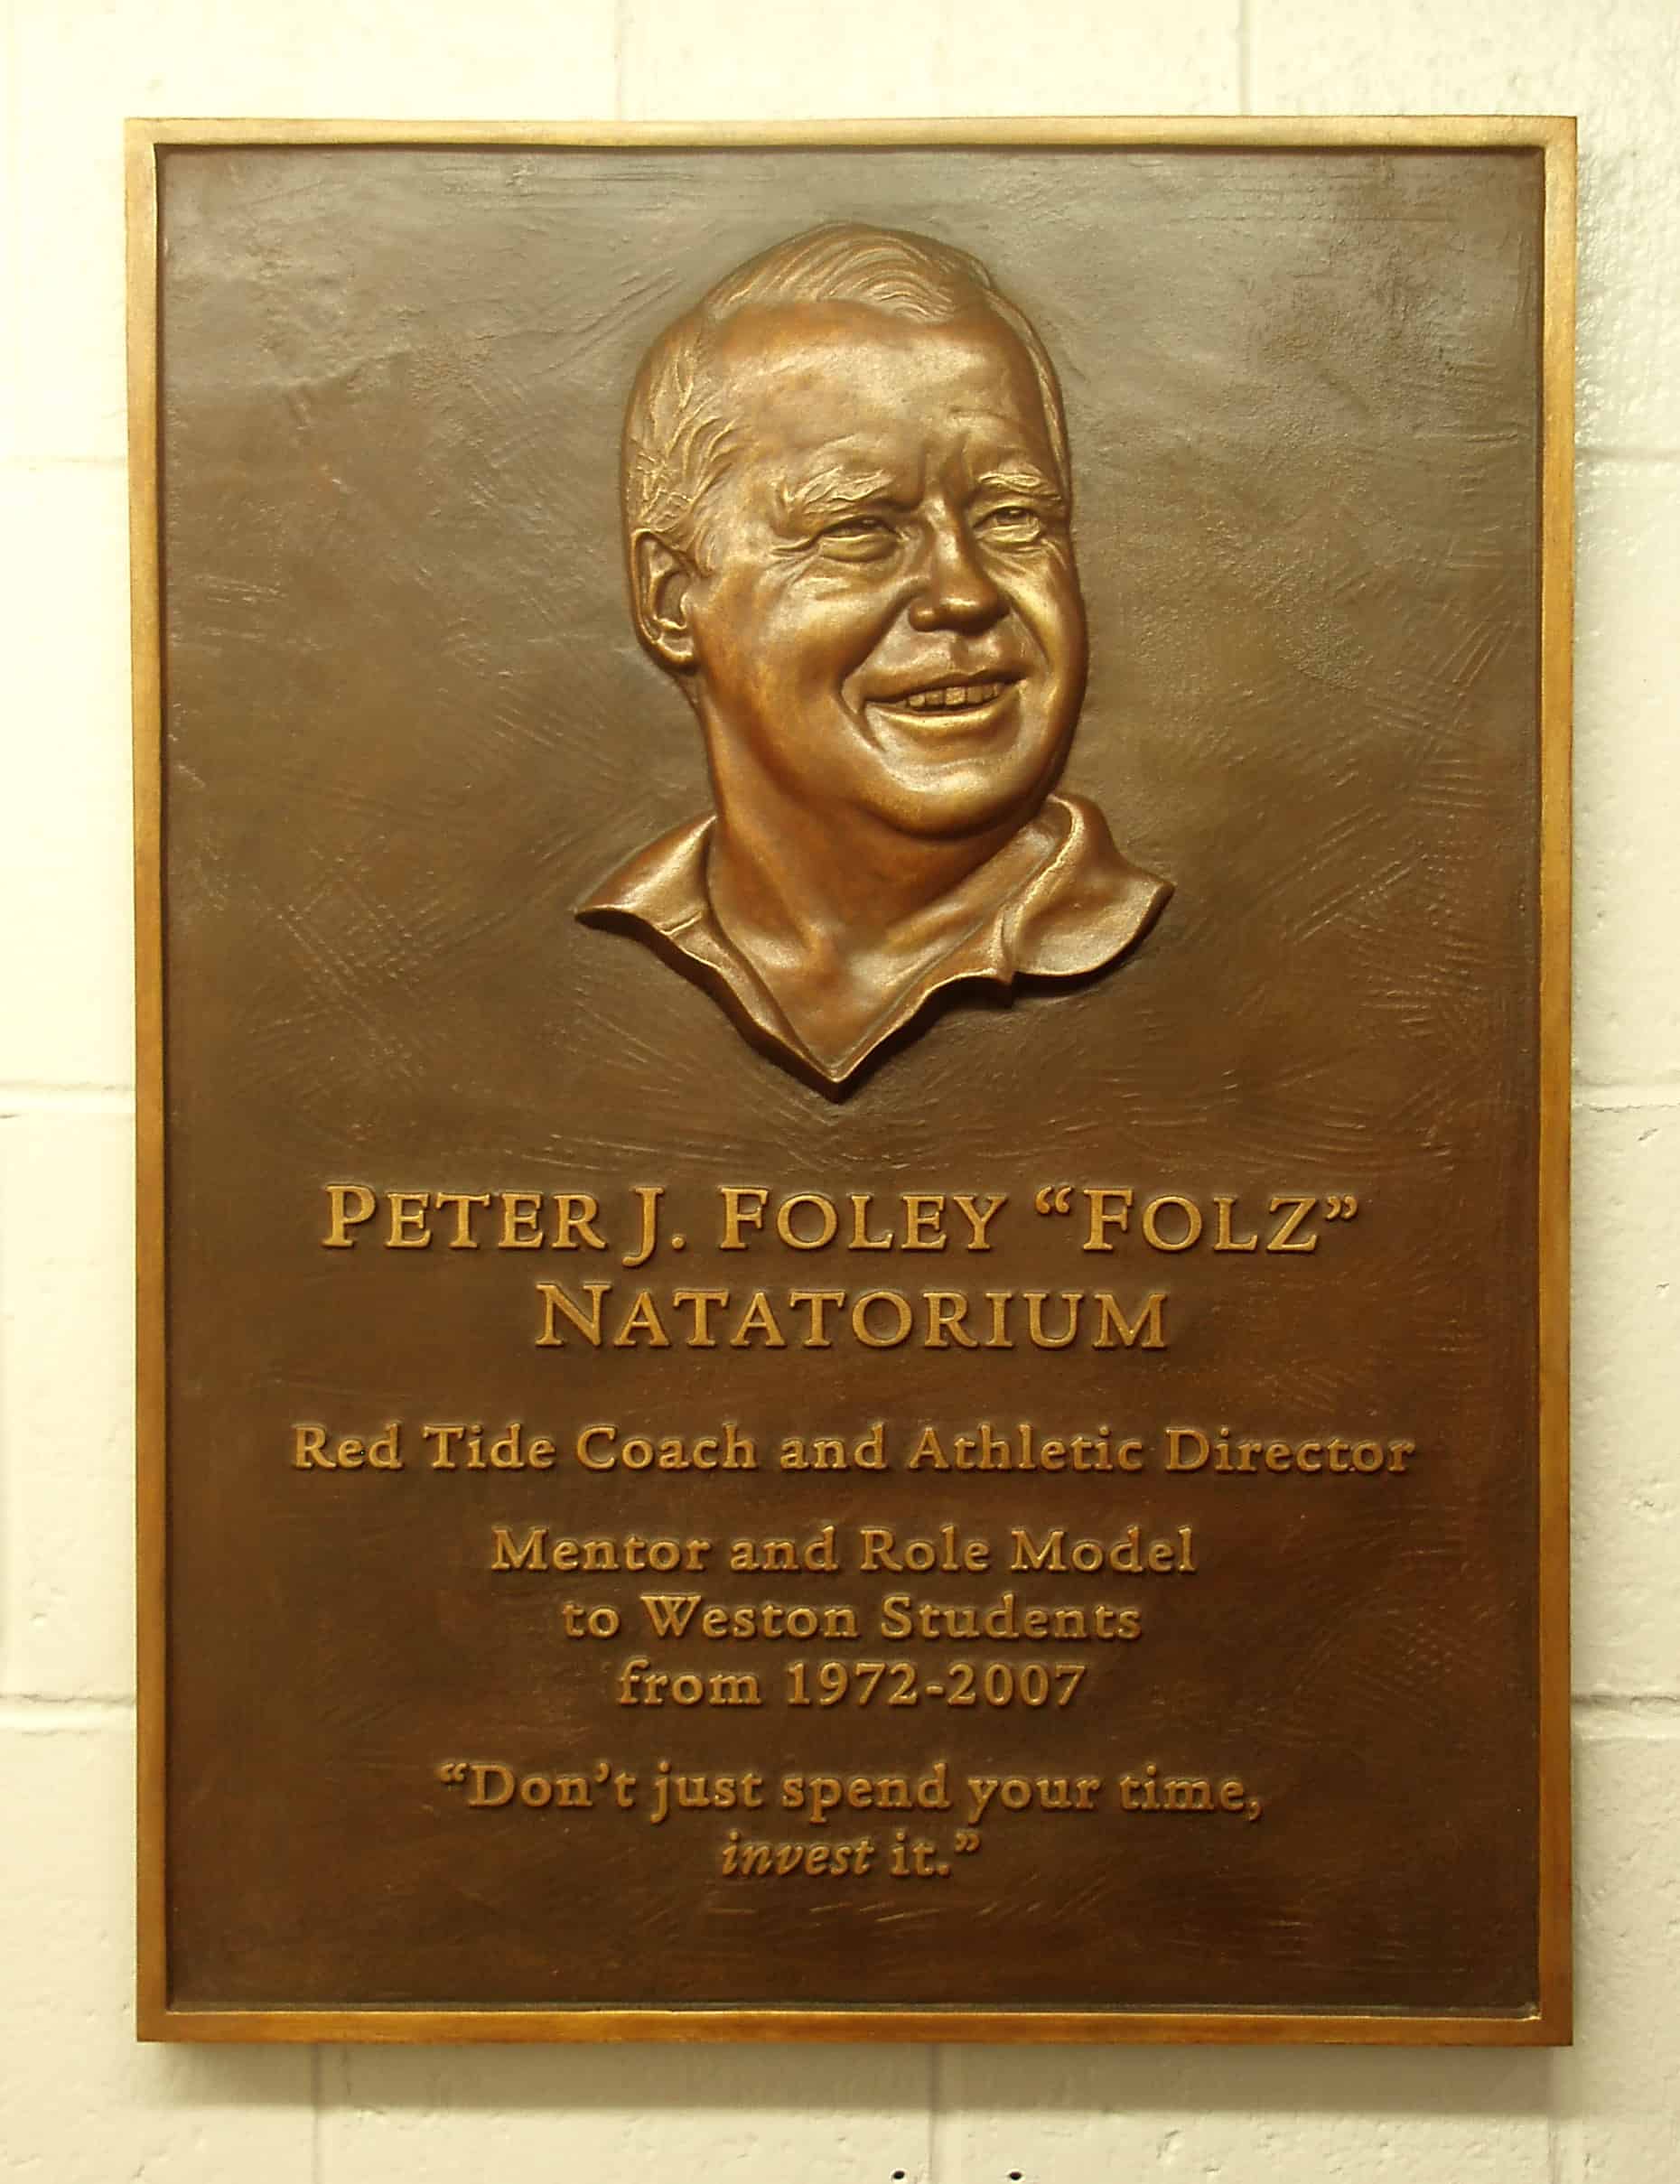 Peter J. Foley “Folz” Natatorium Plaque